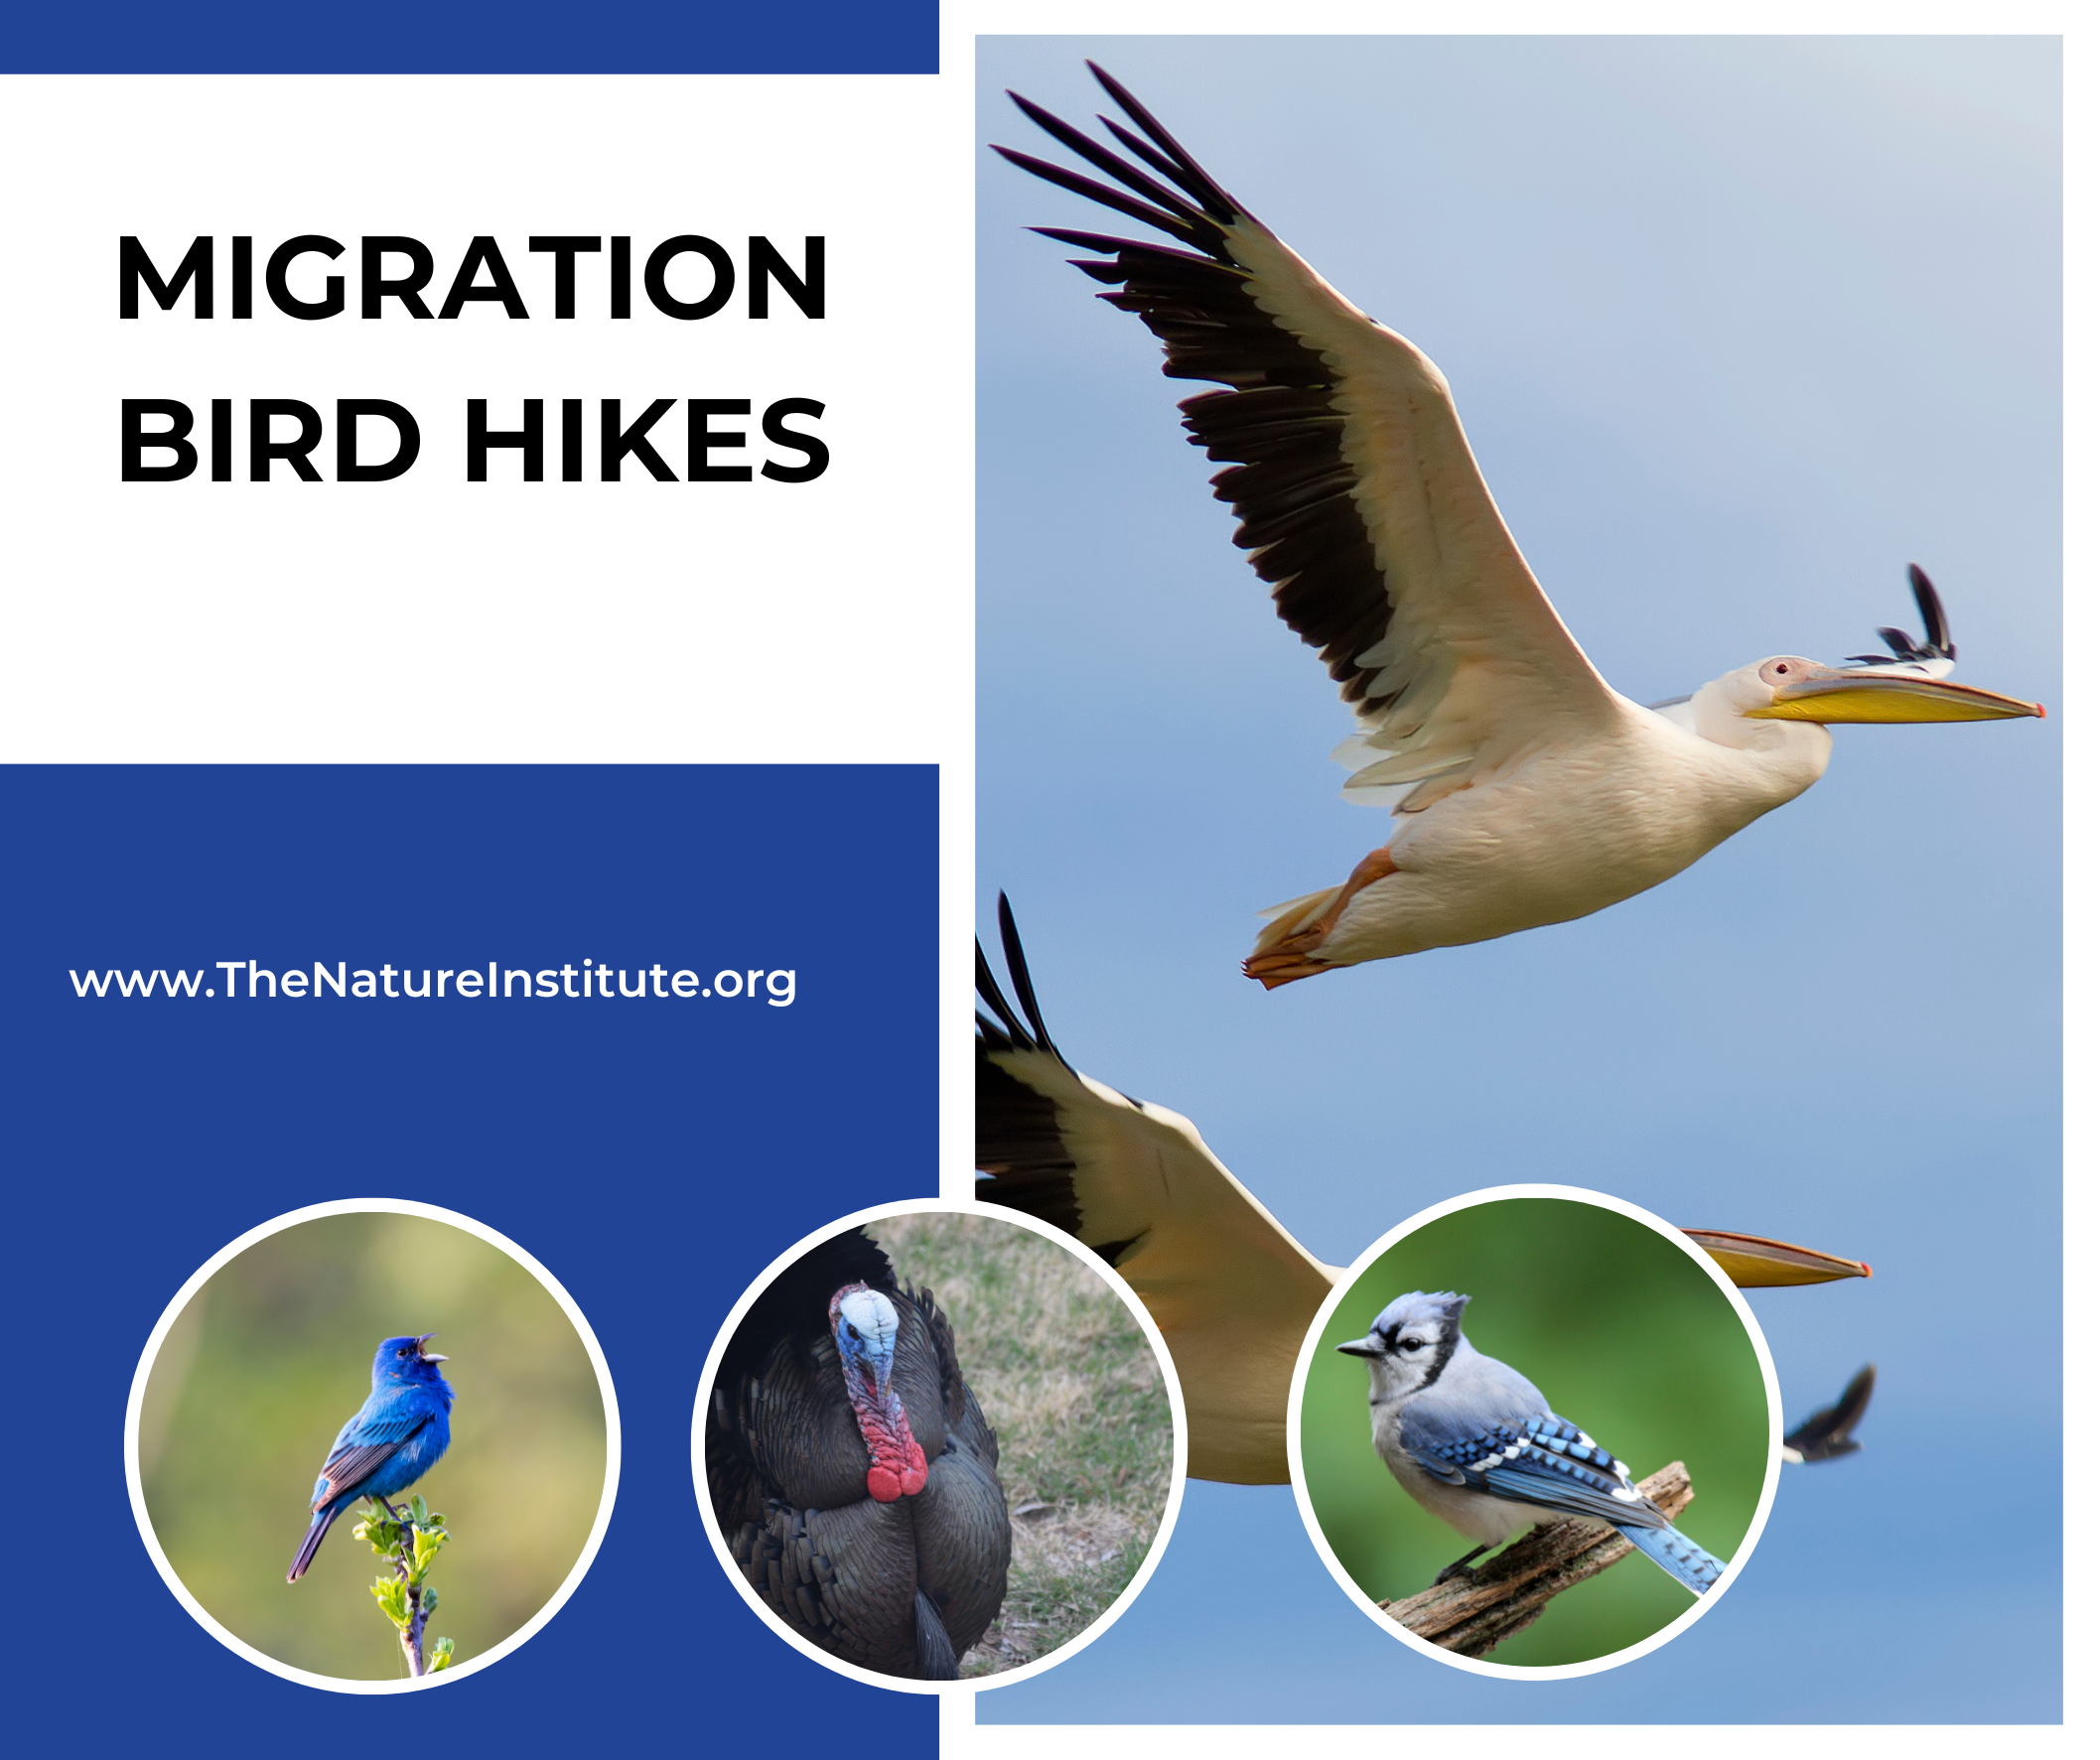 Migration Bird Hikes